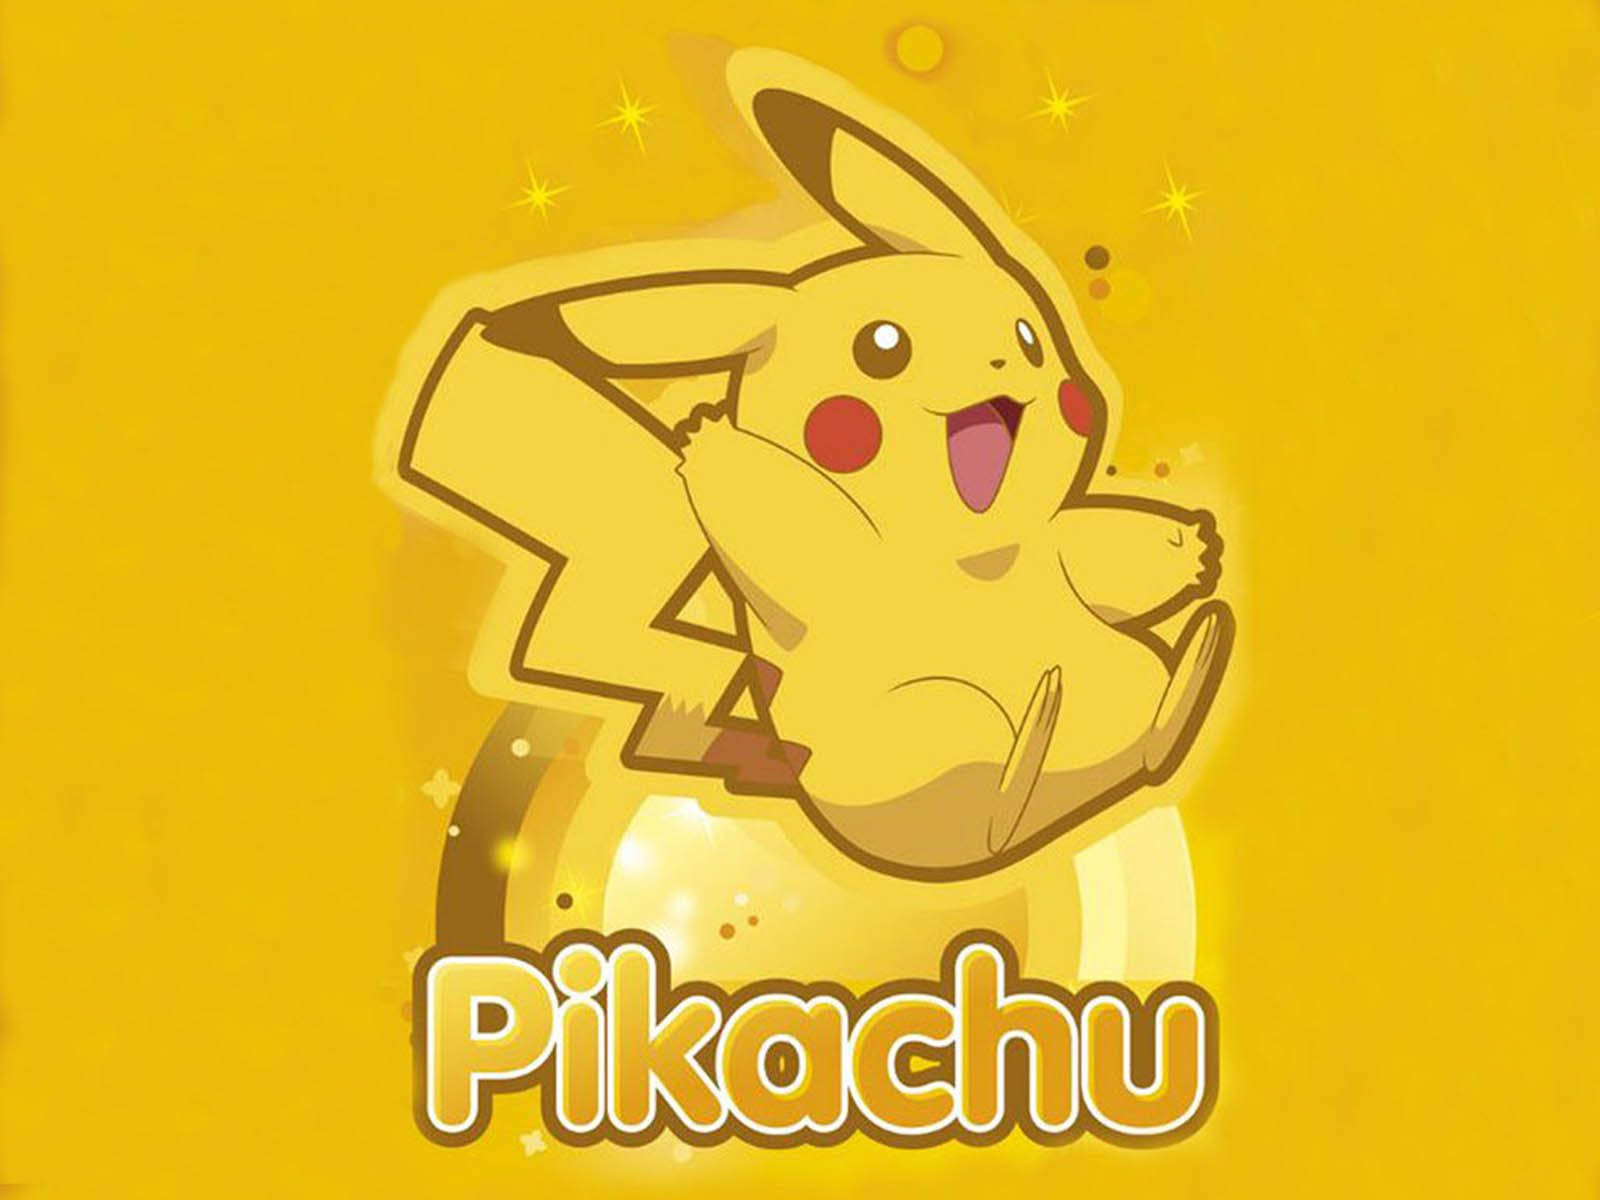 Pikachu 3d Kanto Region Pokémon Background